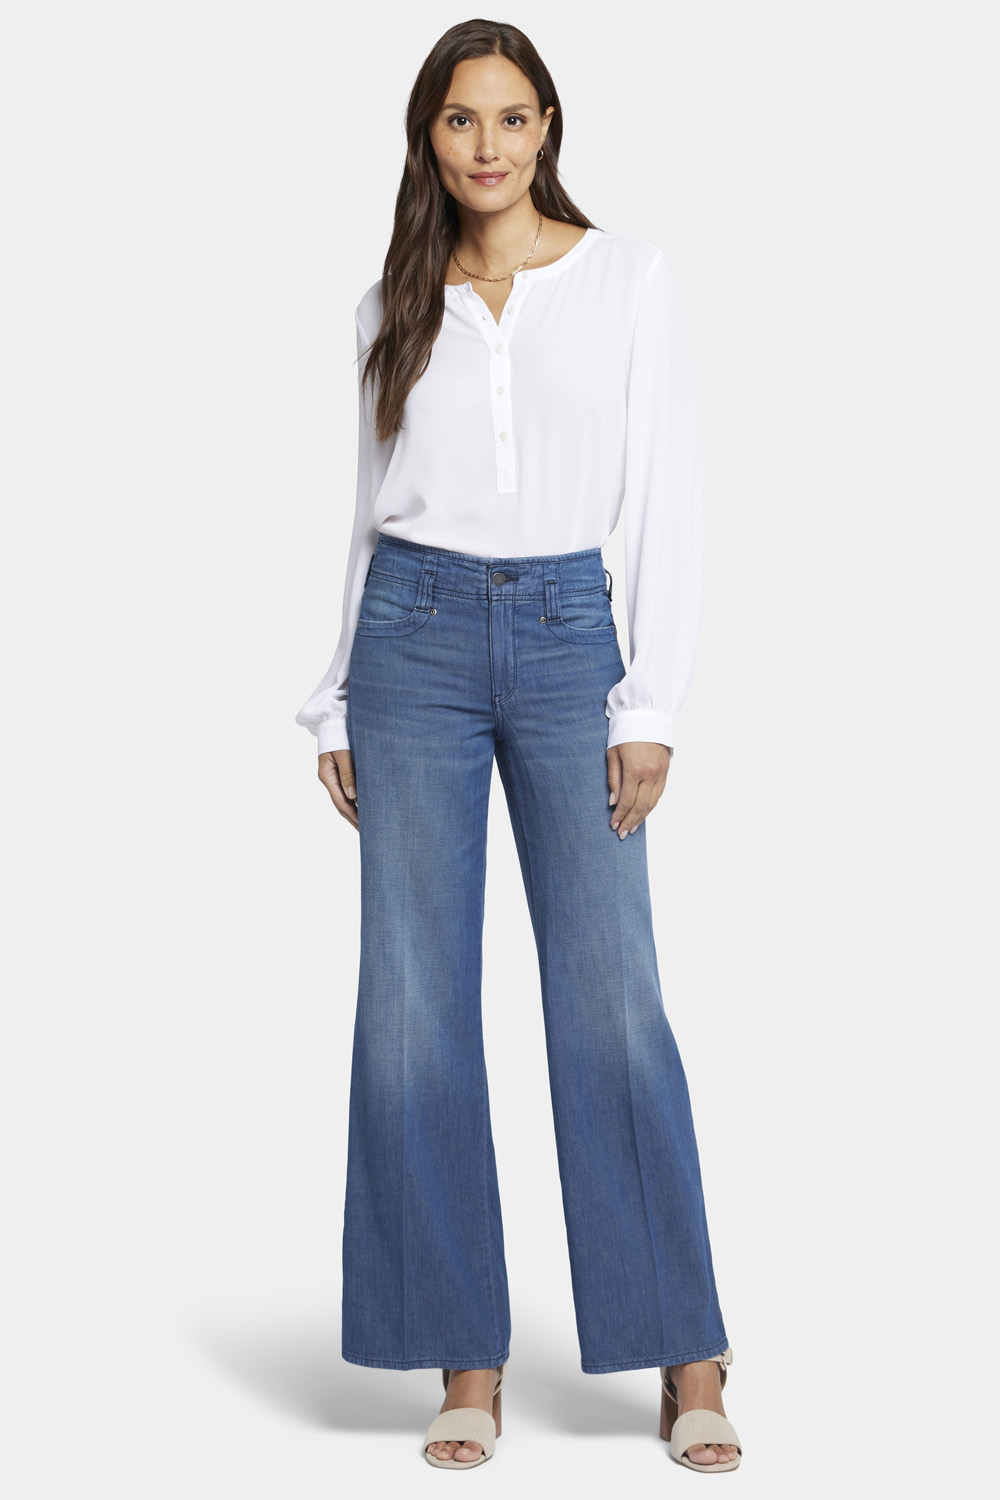 Reduce Price RYRJJ Women High Waist Wide Leg Bootcut Jeans Flared Imitation  Denim Pants Floral Printed Y2K E-Girl Streetwear Bell Bottom Pants(Blue,S)